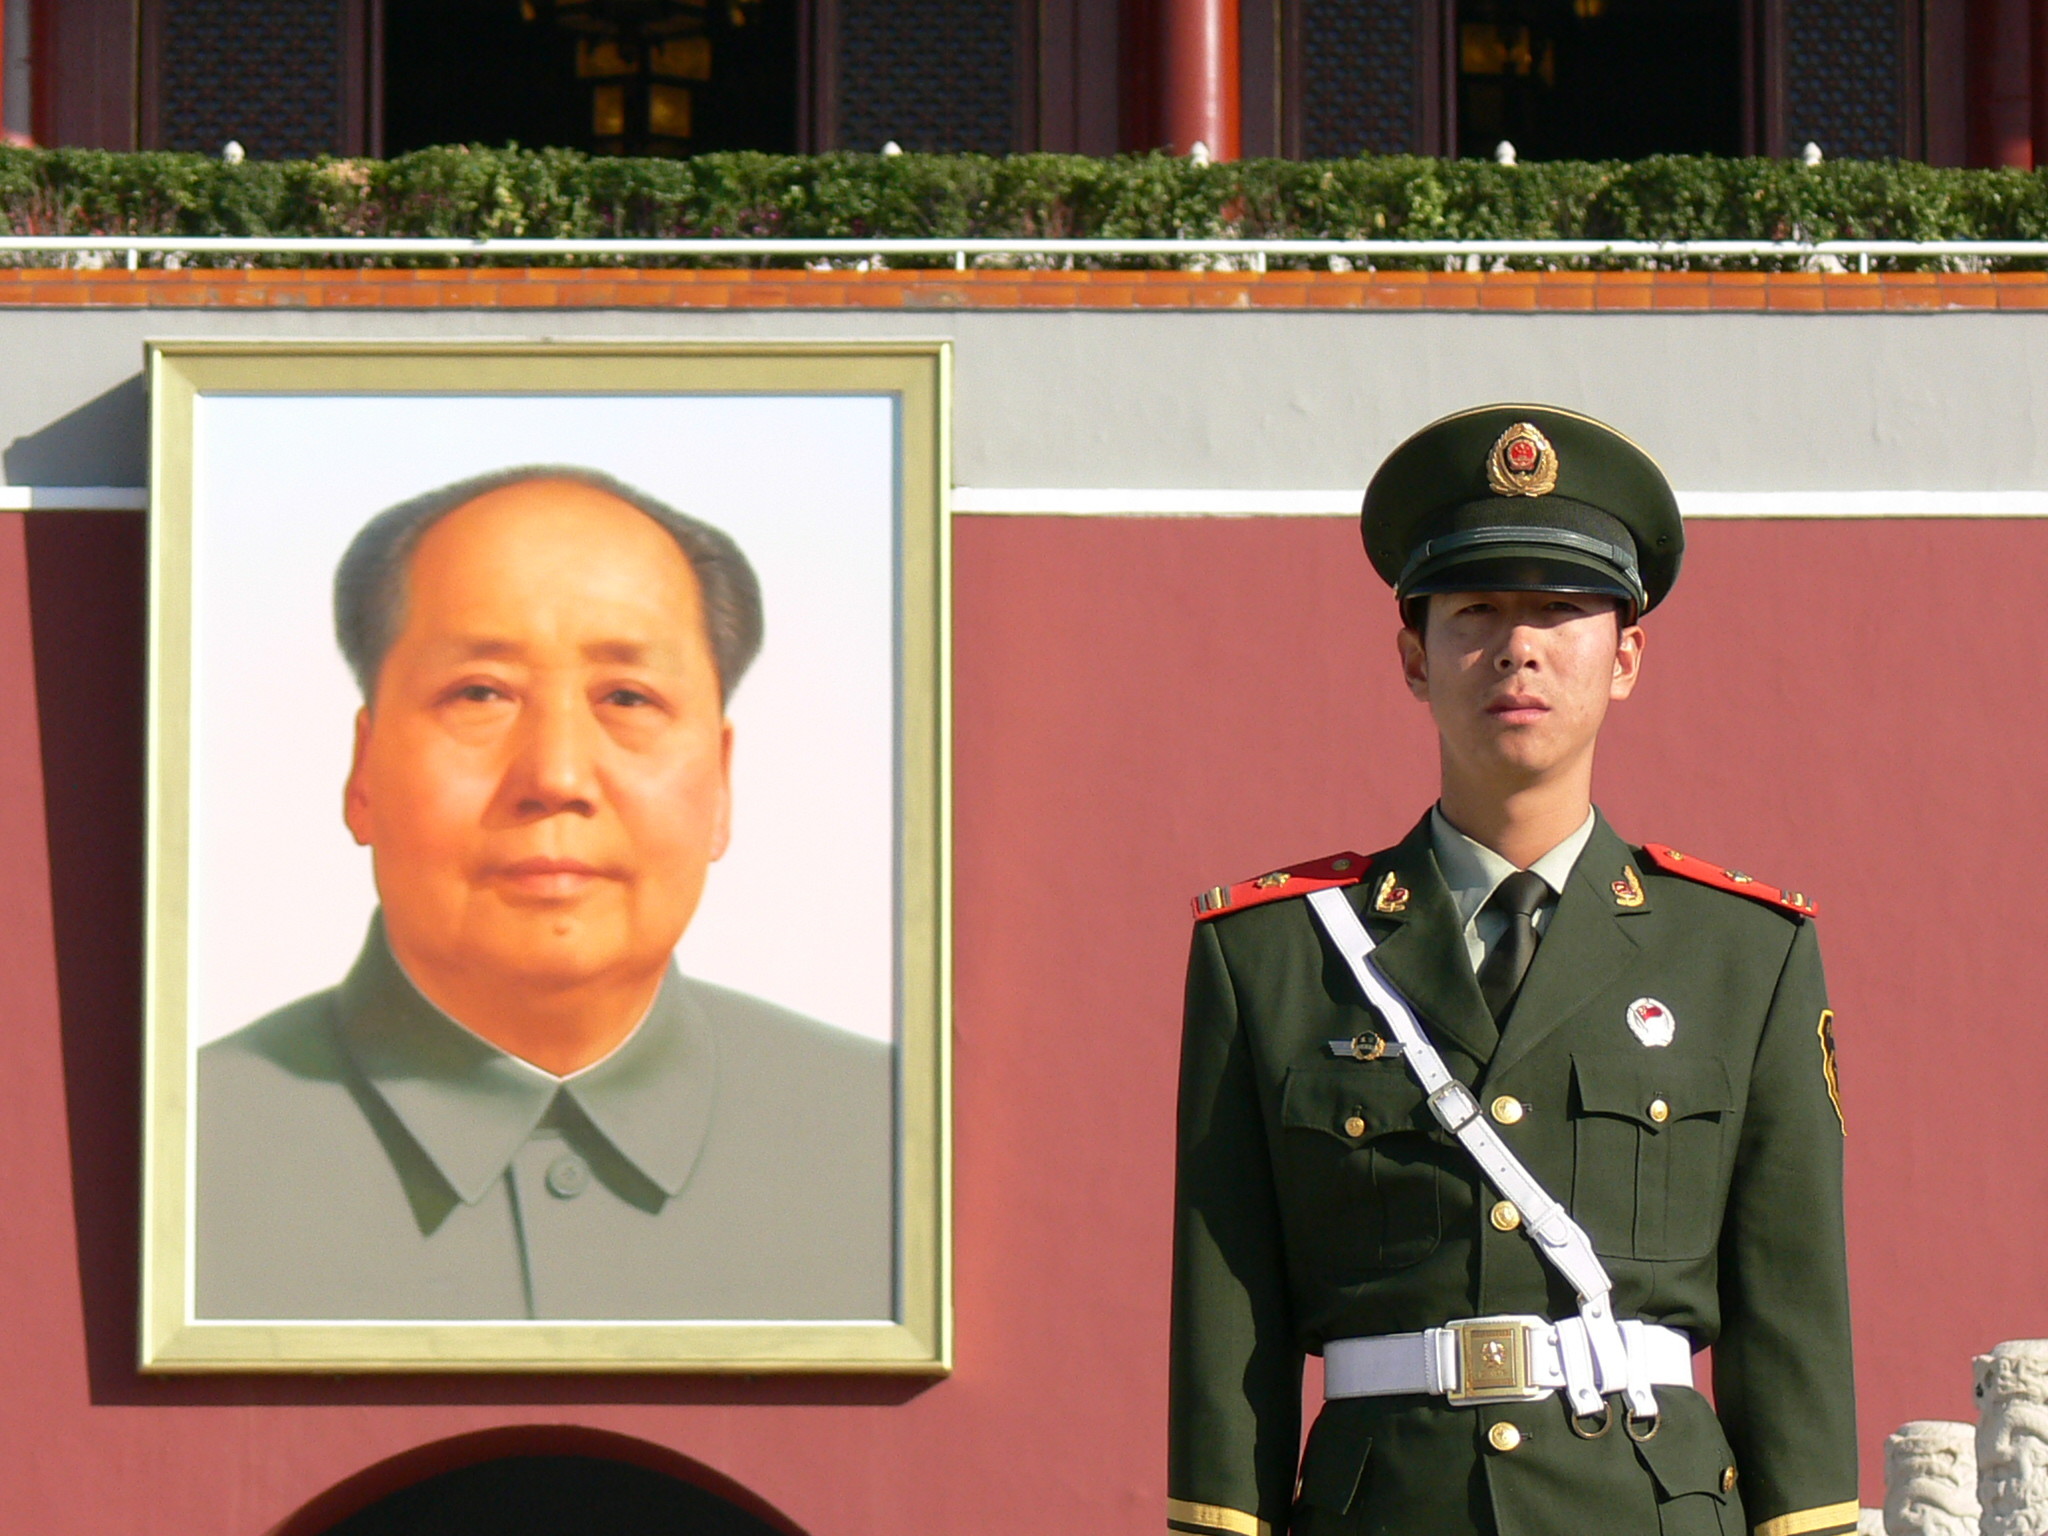 2048x1536 File:The portrait of Mao Zedong.jpg